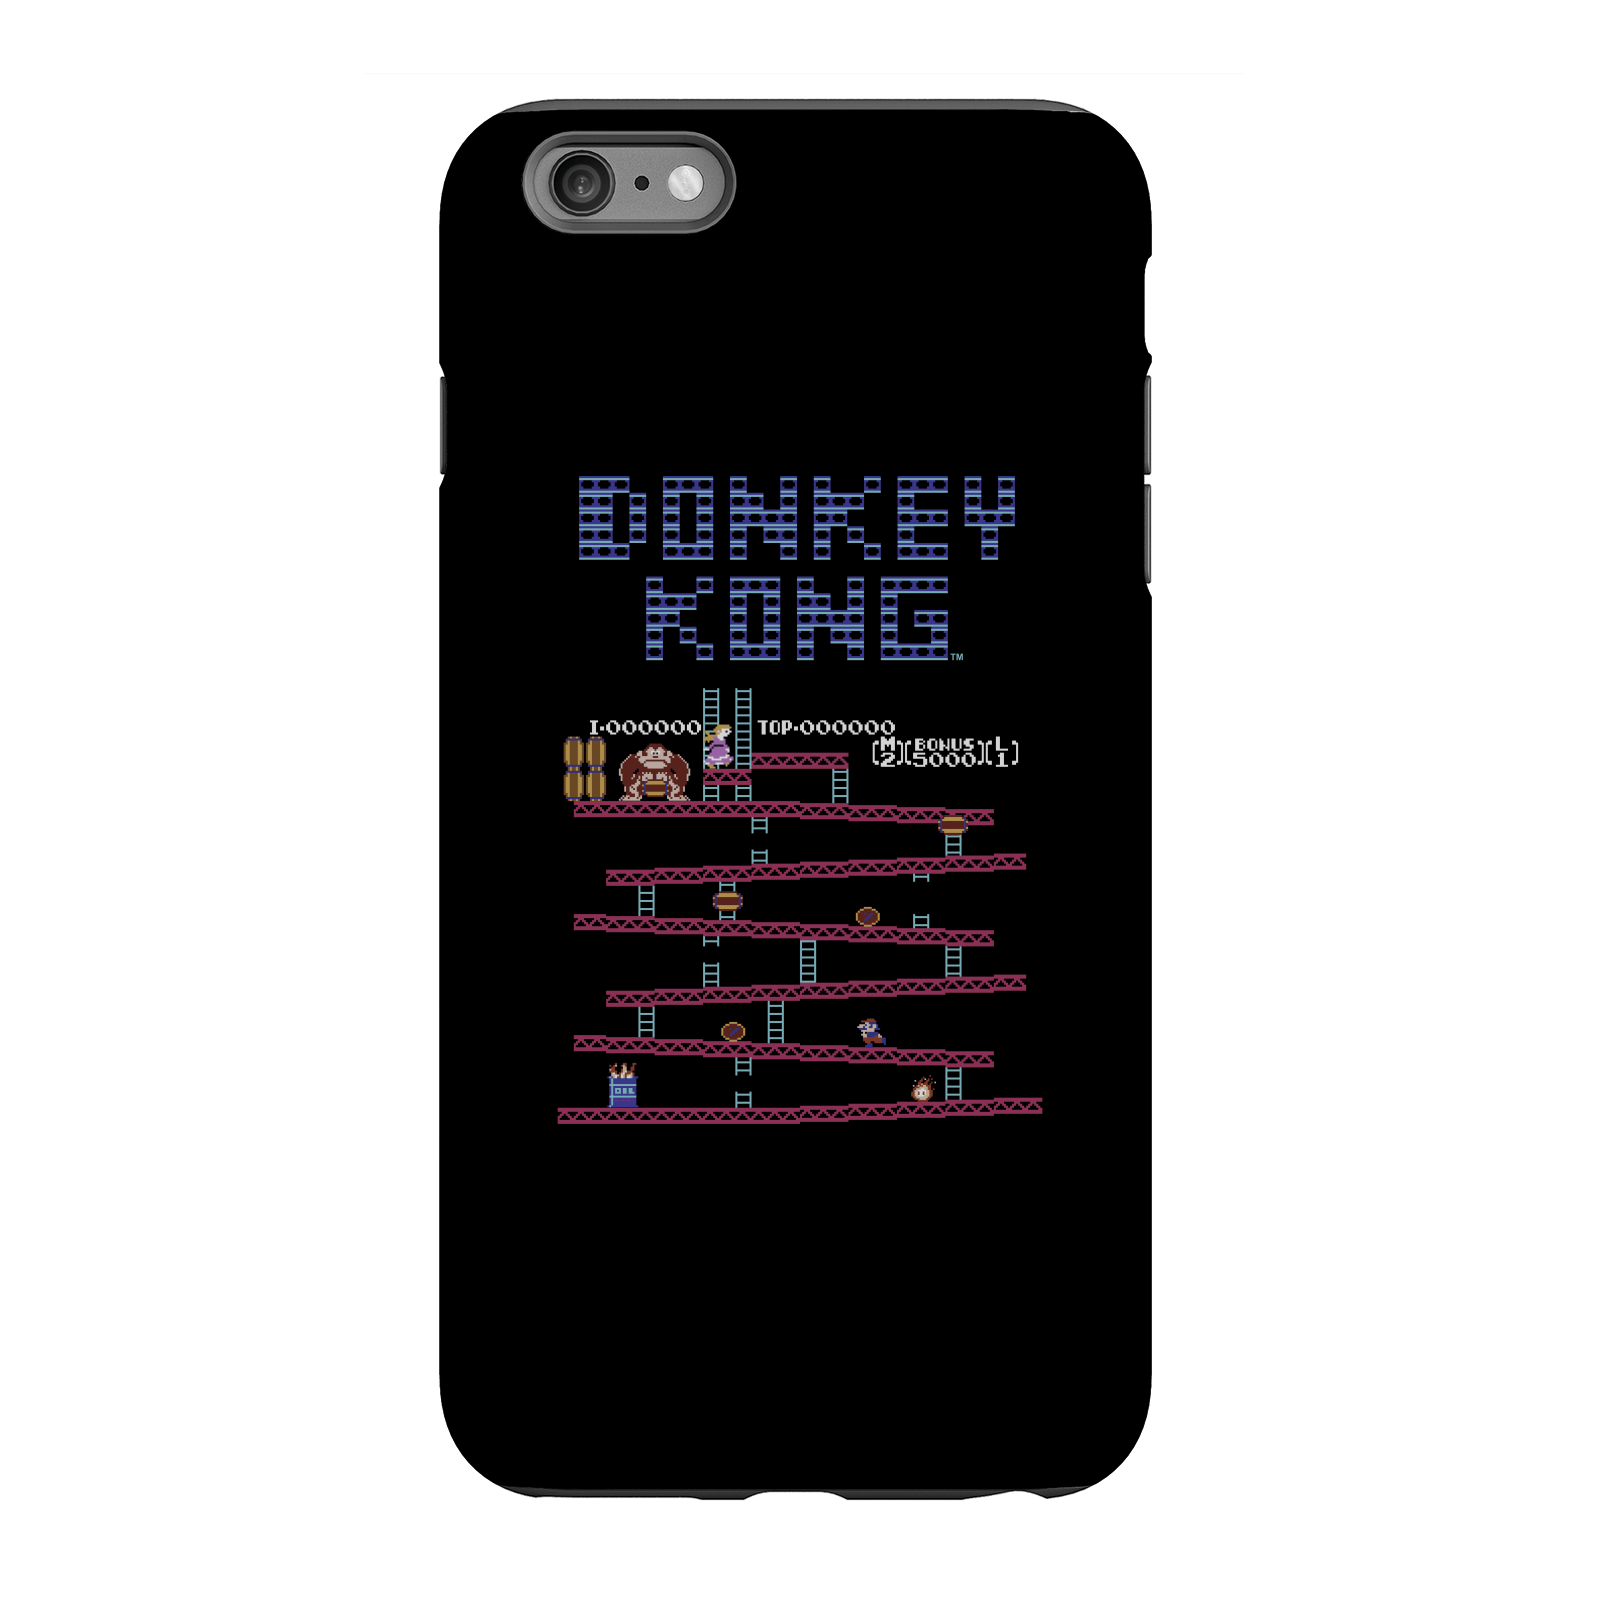 Nintendo Donkey Kong Retro Phone Case - iPhone 6 Plus - Tough Case - Matte